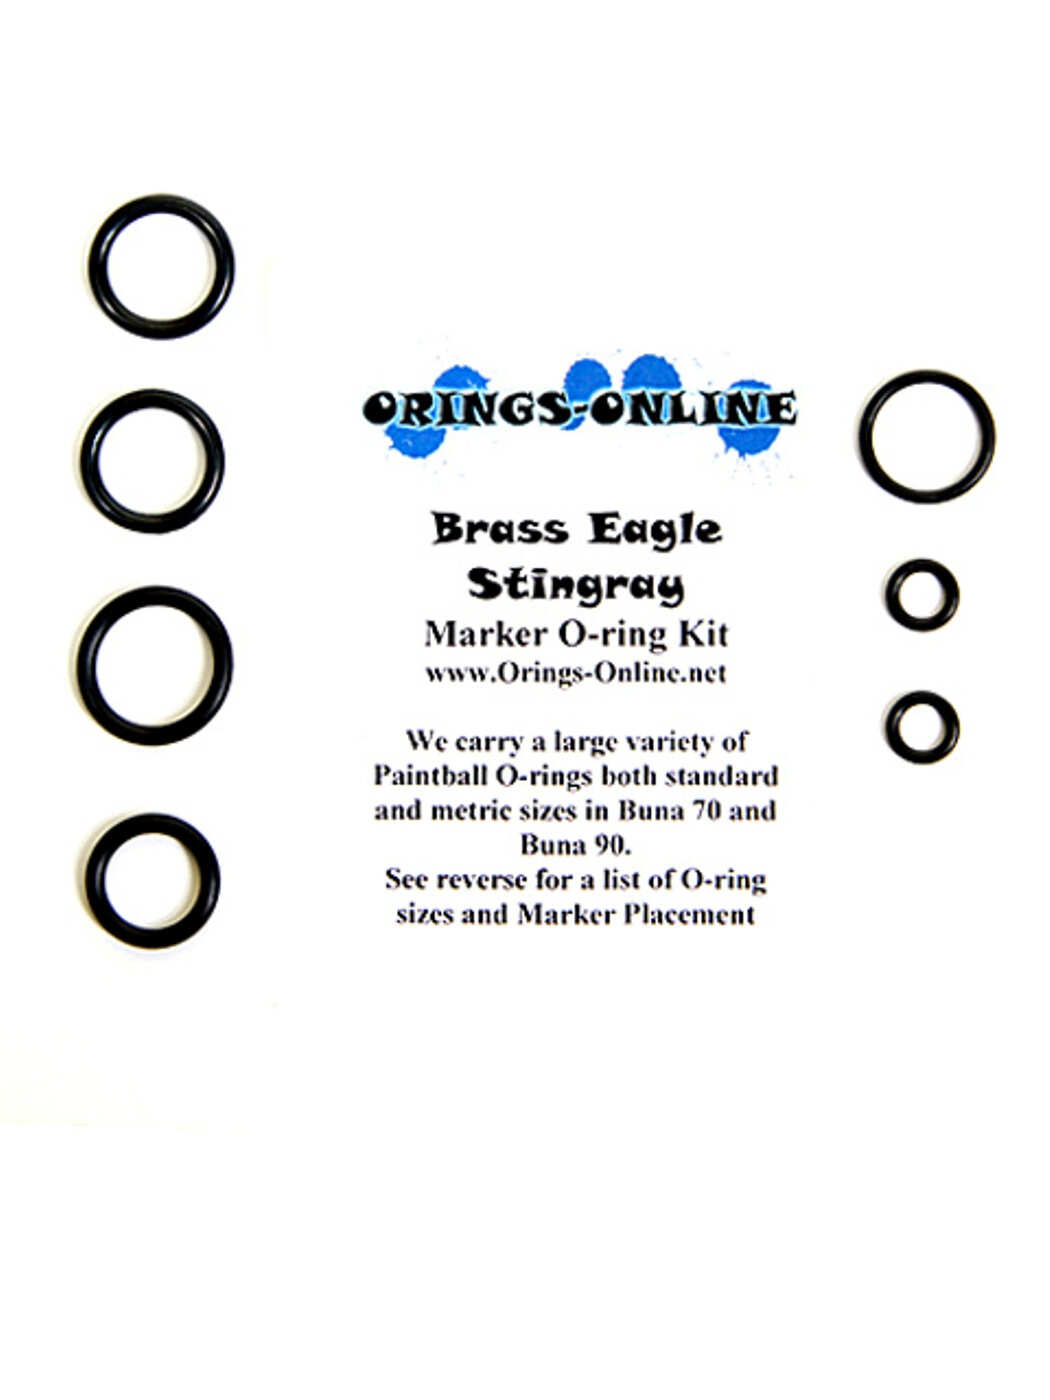 Brass Eagle - Stingray Marker O-ring Kit